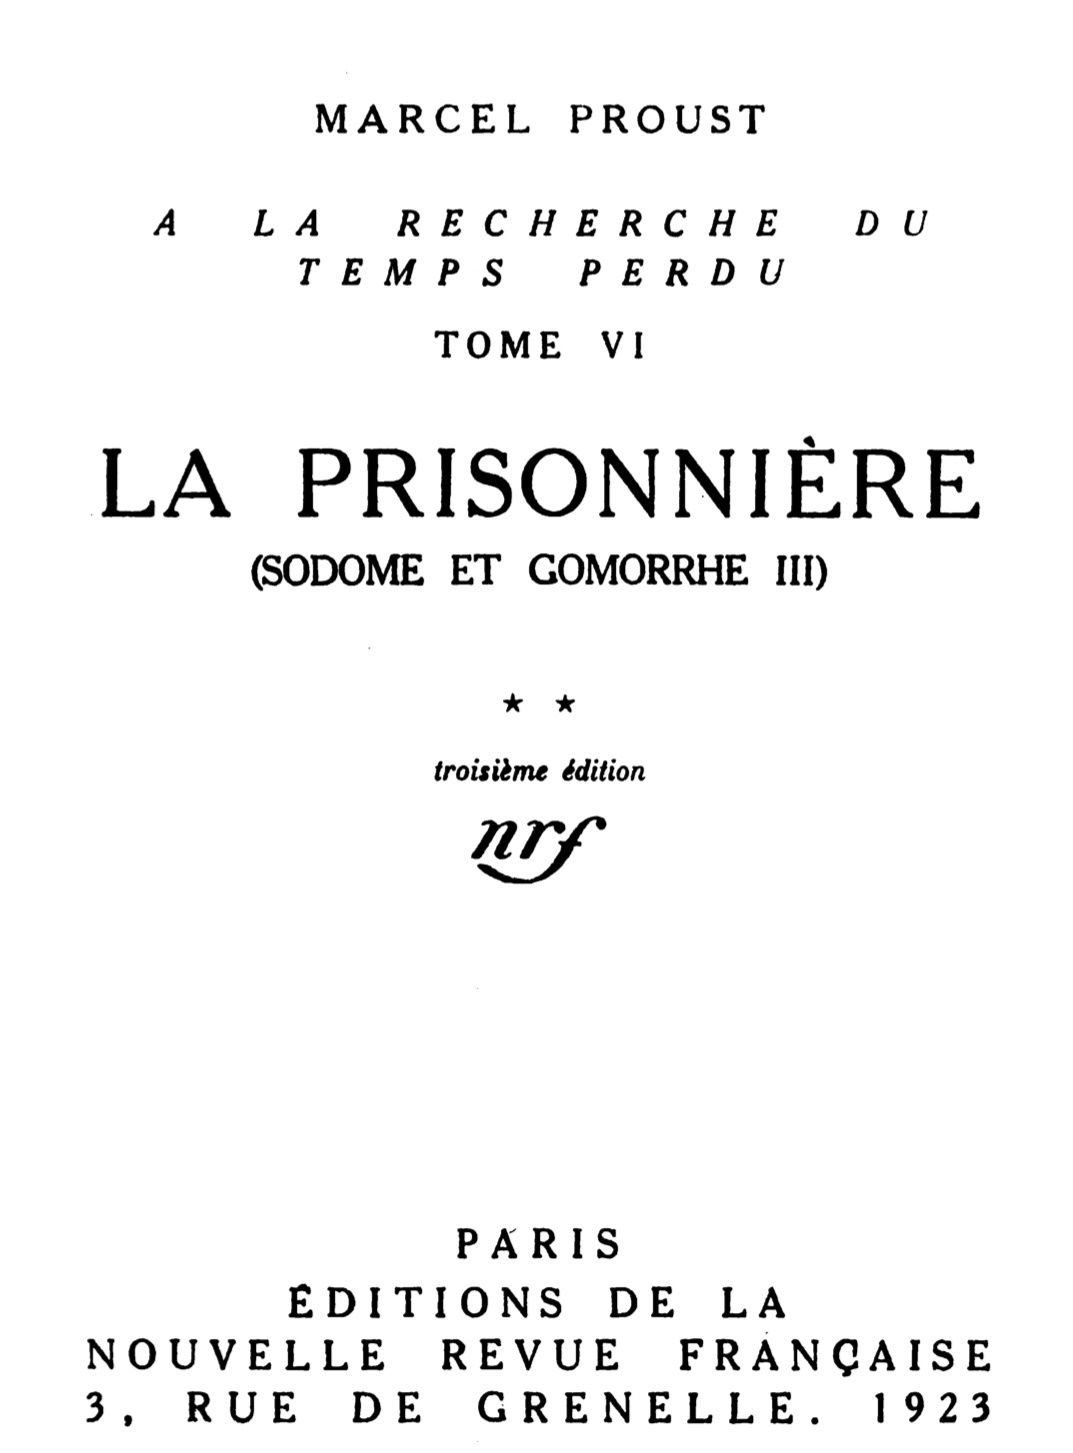 The Gutenberg eBook of La Prisonnière (Sodome Gomorrhe III), by Proust.